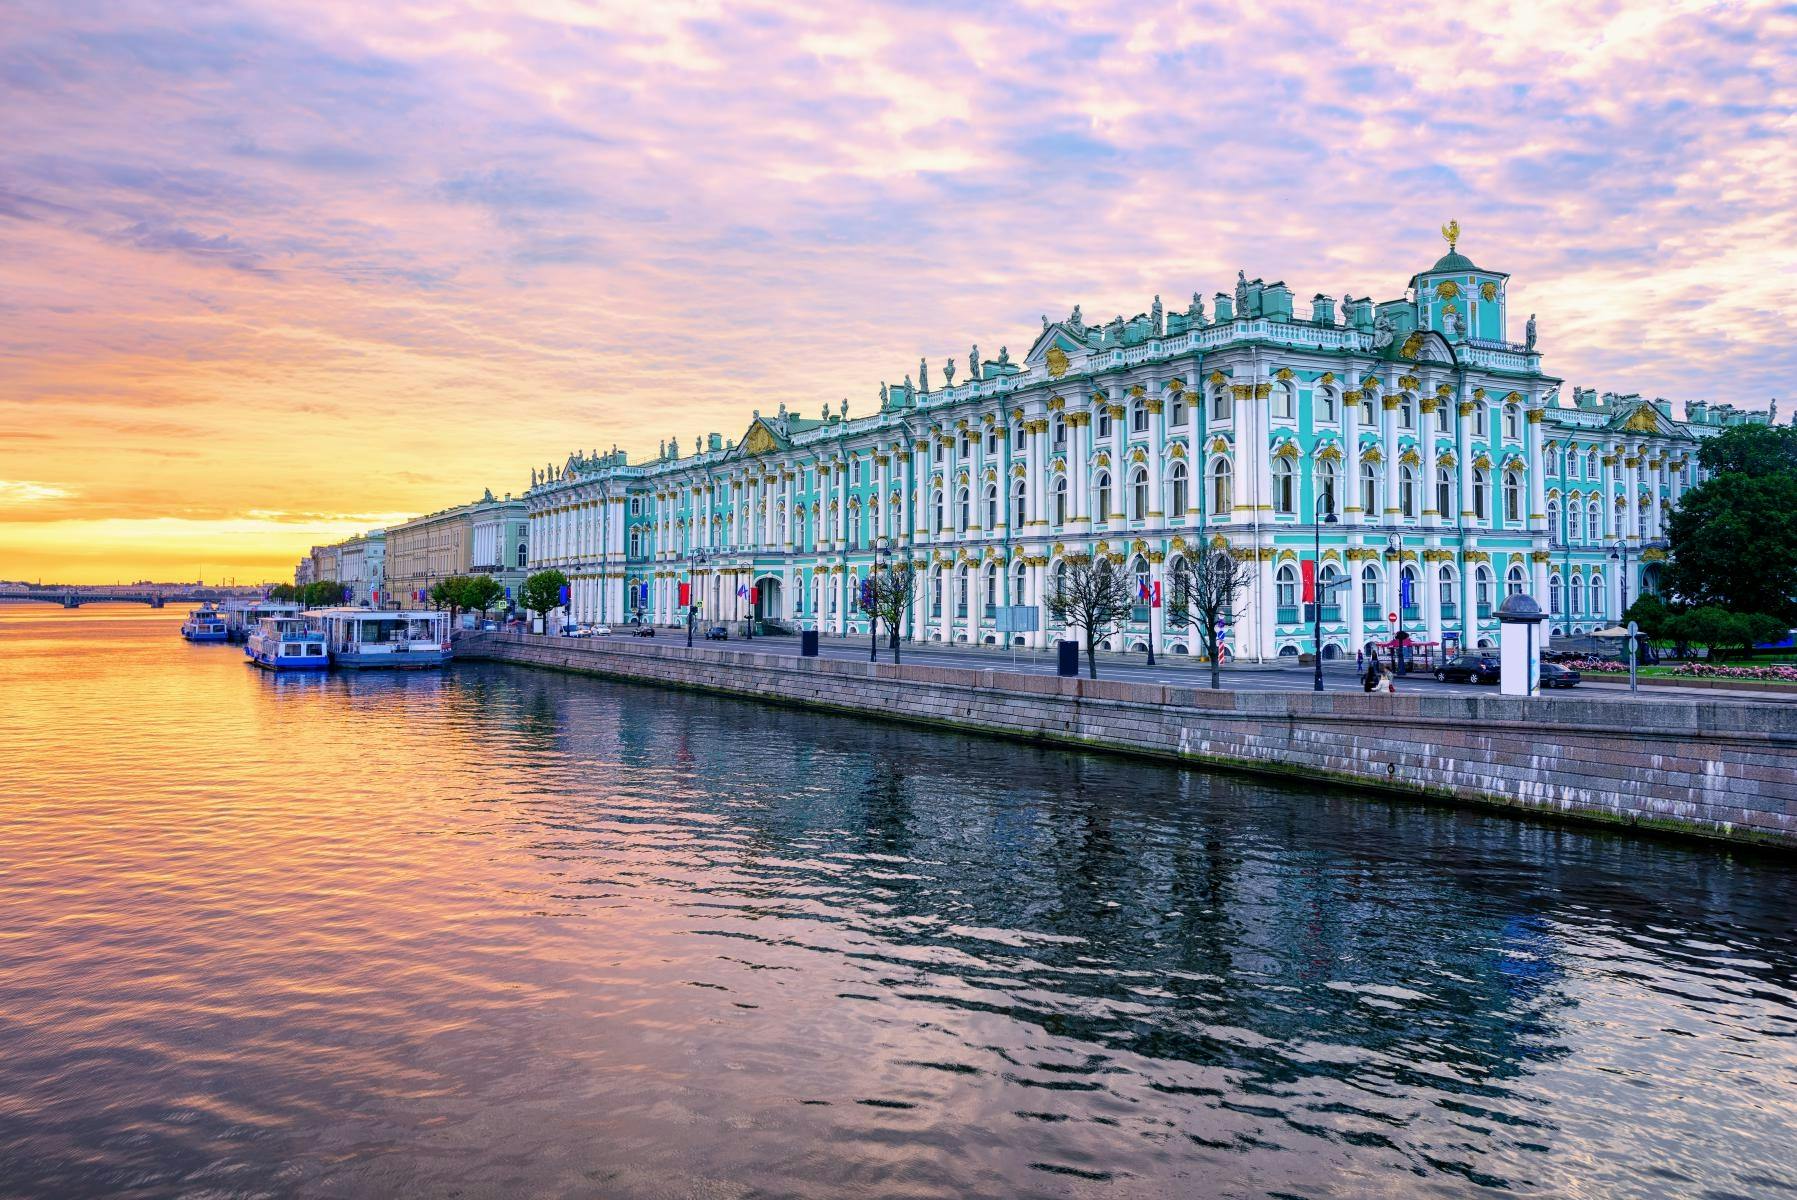 Eremitage Sankt Petersburg